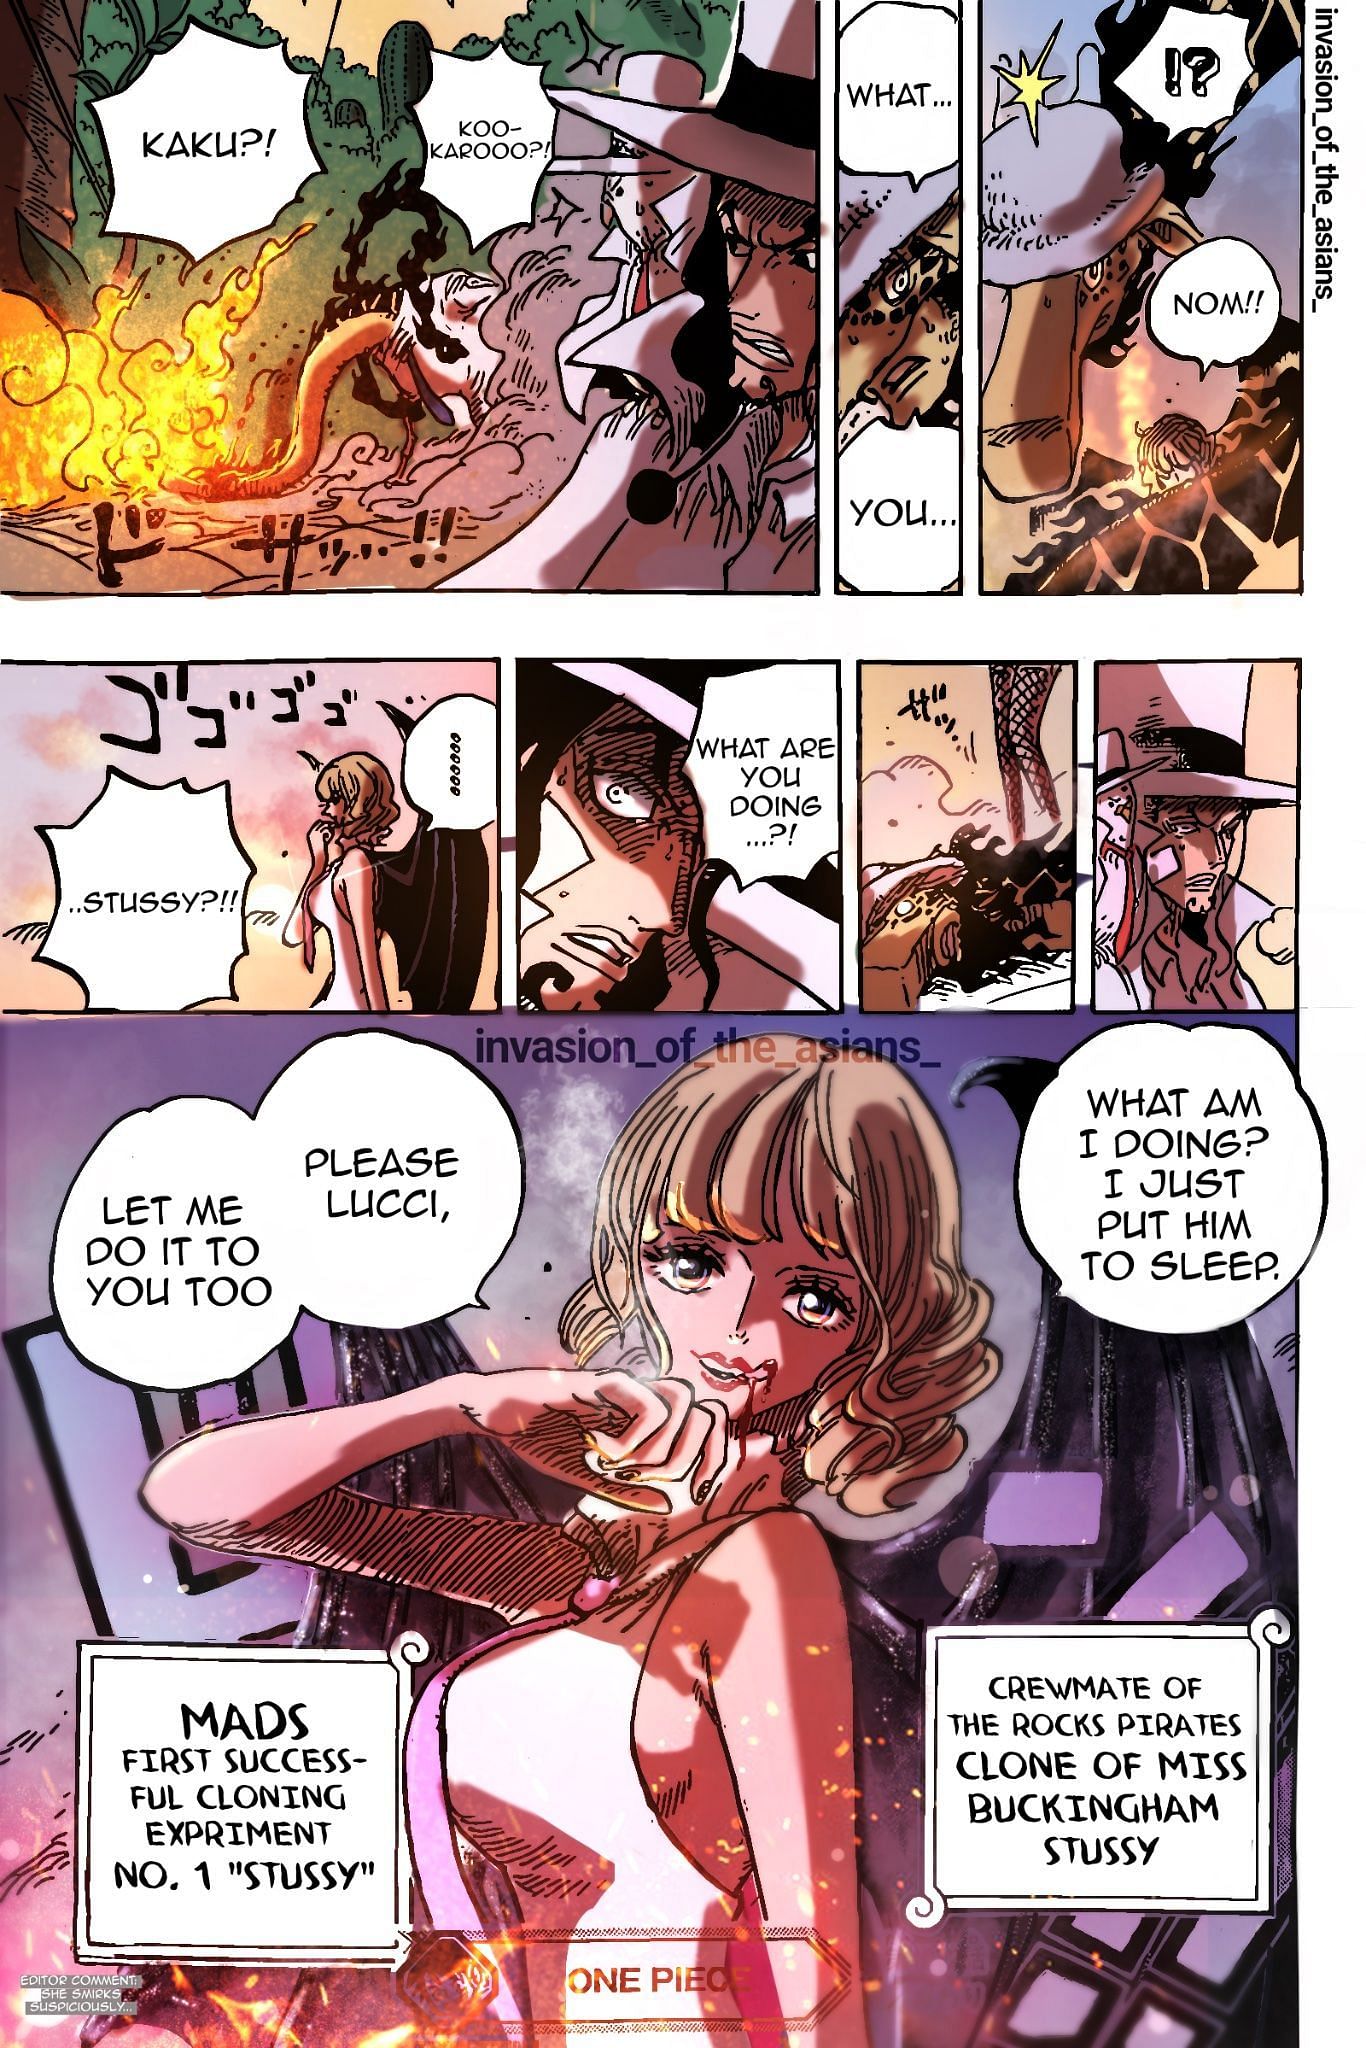 Stussy as seen in One Piece chapter 1072 (Image via Eiichiro Oda)